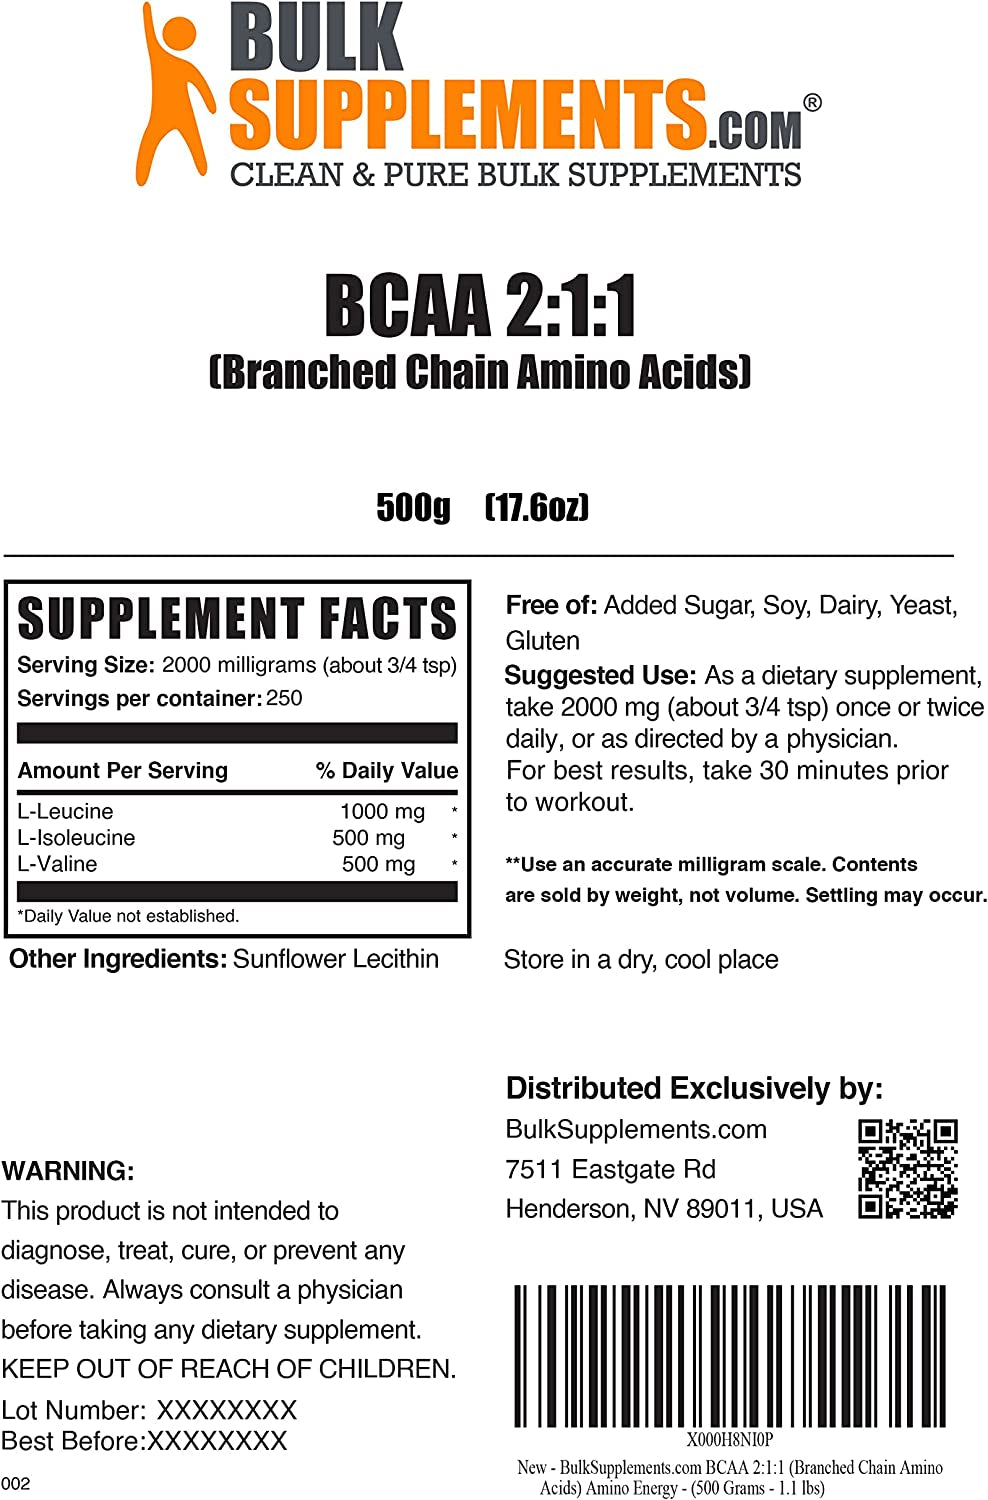 BULKSUPPLEMENTS.COM BCAA 2:1:1 Powder (Branched Amino Acids) 500G, with Creatine Monohydrate Powder (Micronized) 500G, & L-Citrulline Malate 2:1 Powder 500G Bundle